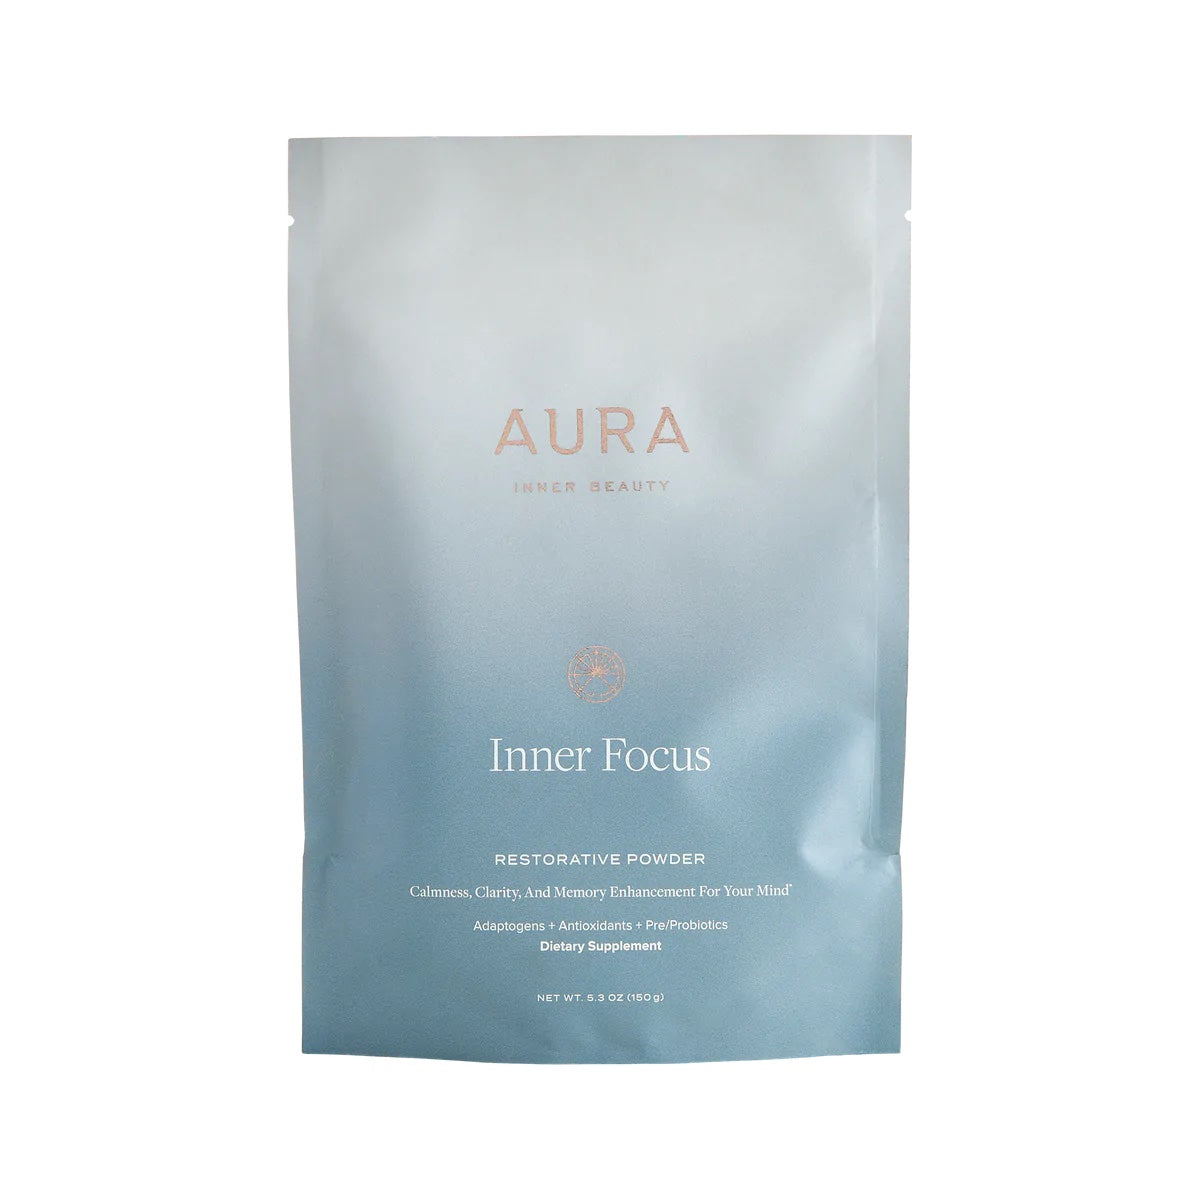 AURA Inner Beauty | Inner Focus Restorative Powder